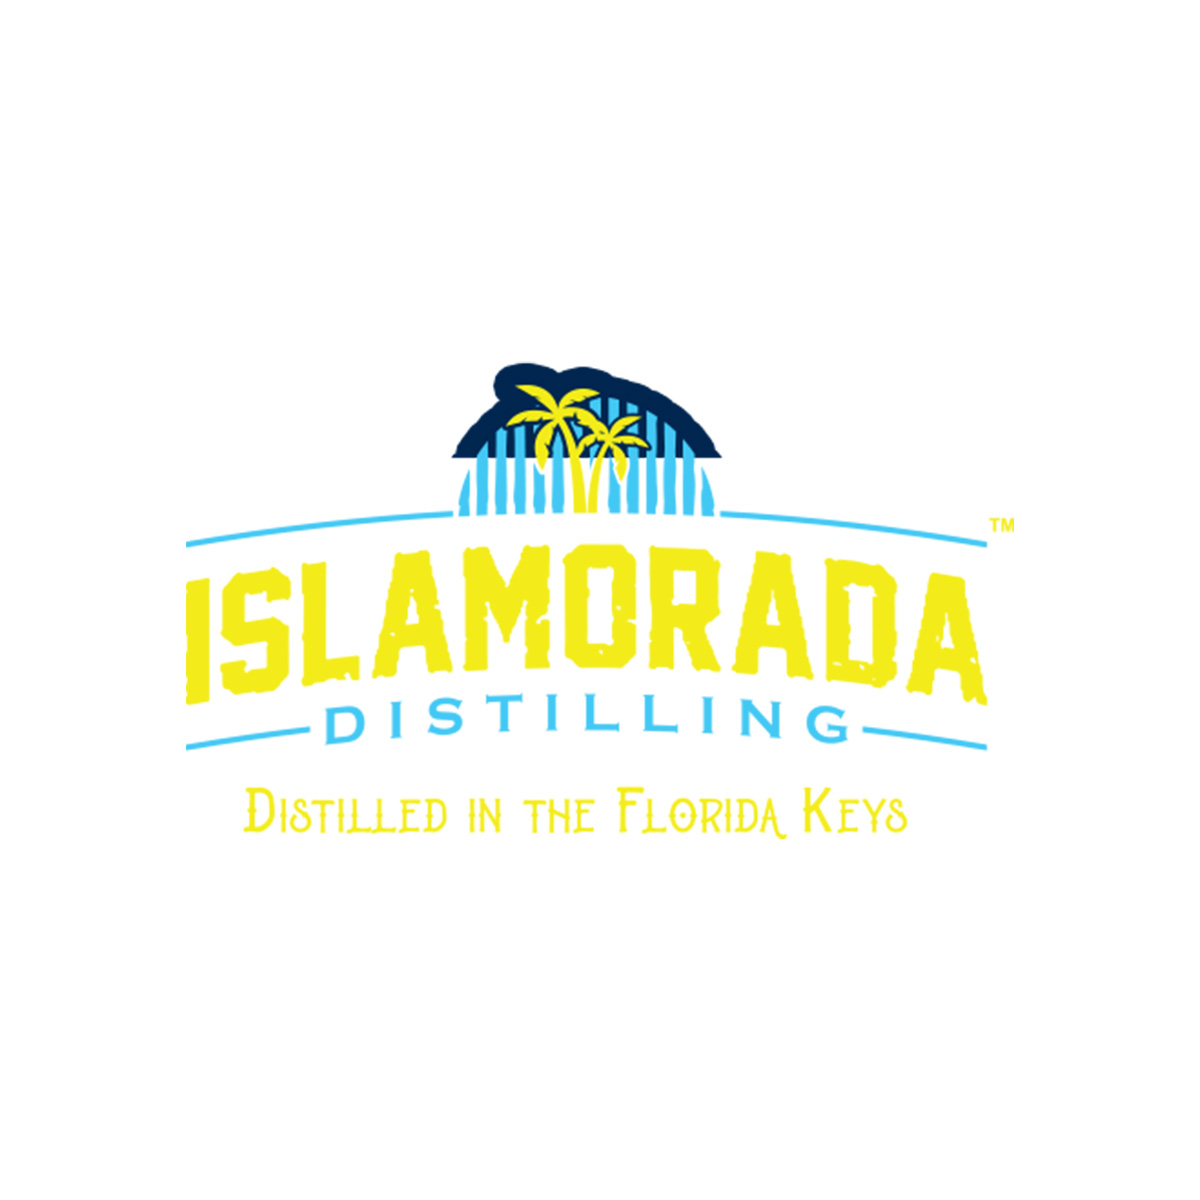 Islamorada Distilling